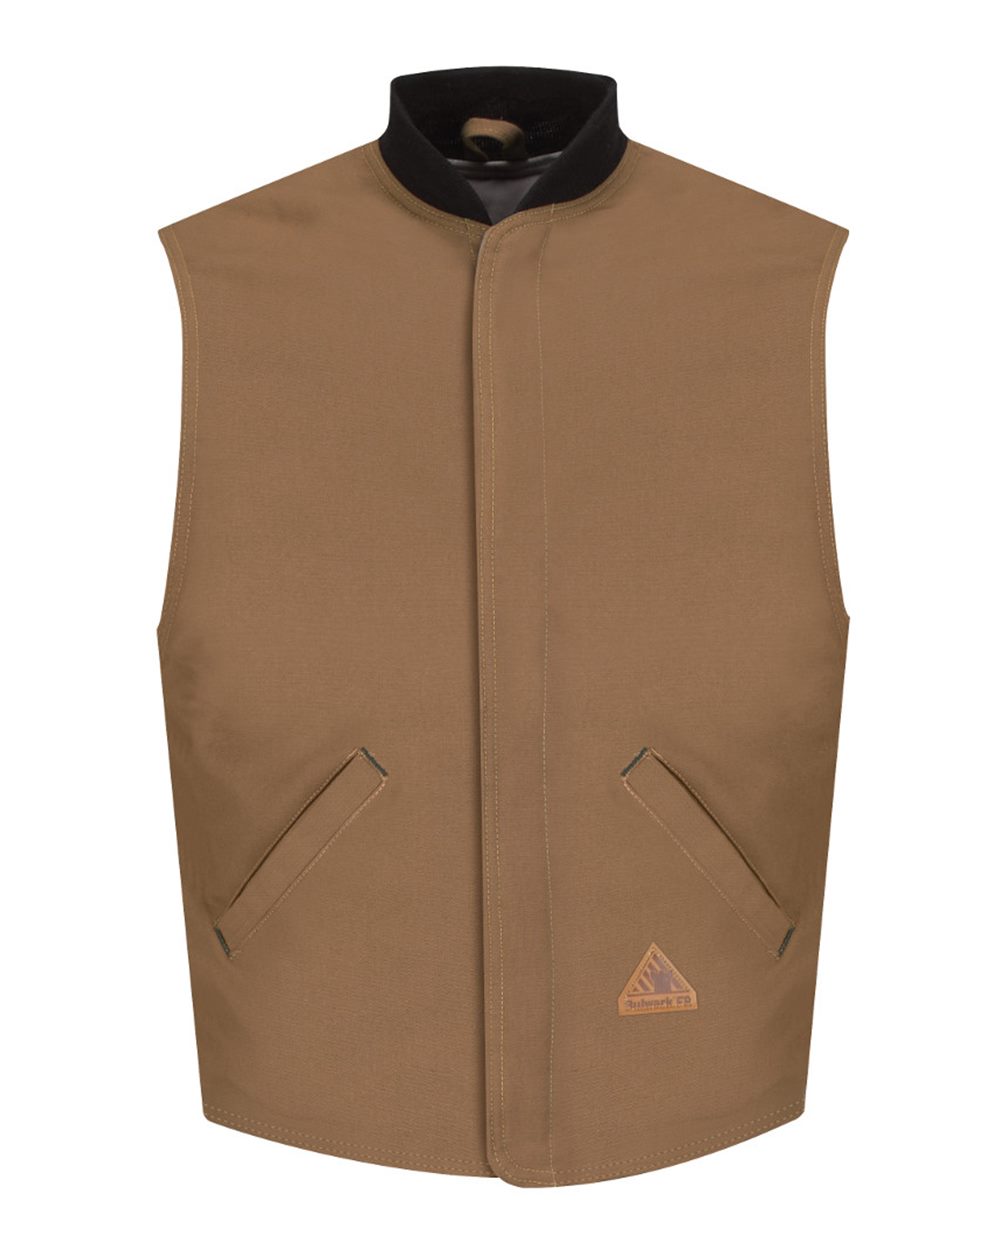 Brown Duck Vest Jacket Liner - EXCEL FR® ComforTouch?? - Long Sizes-Bulwark